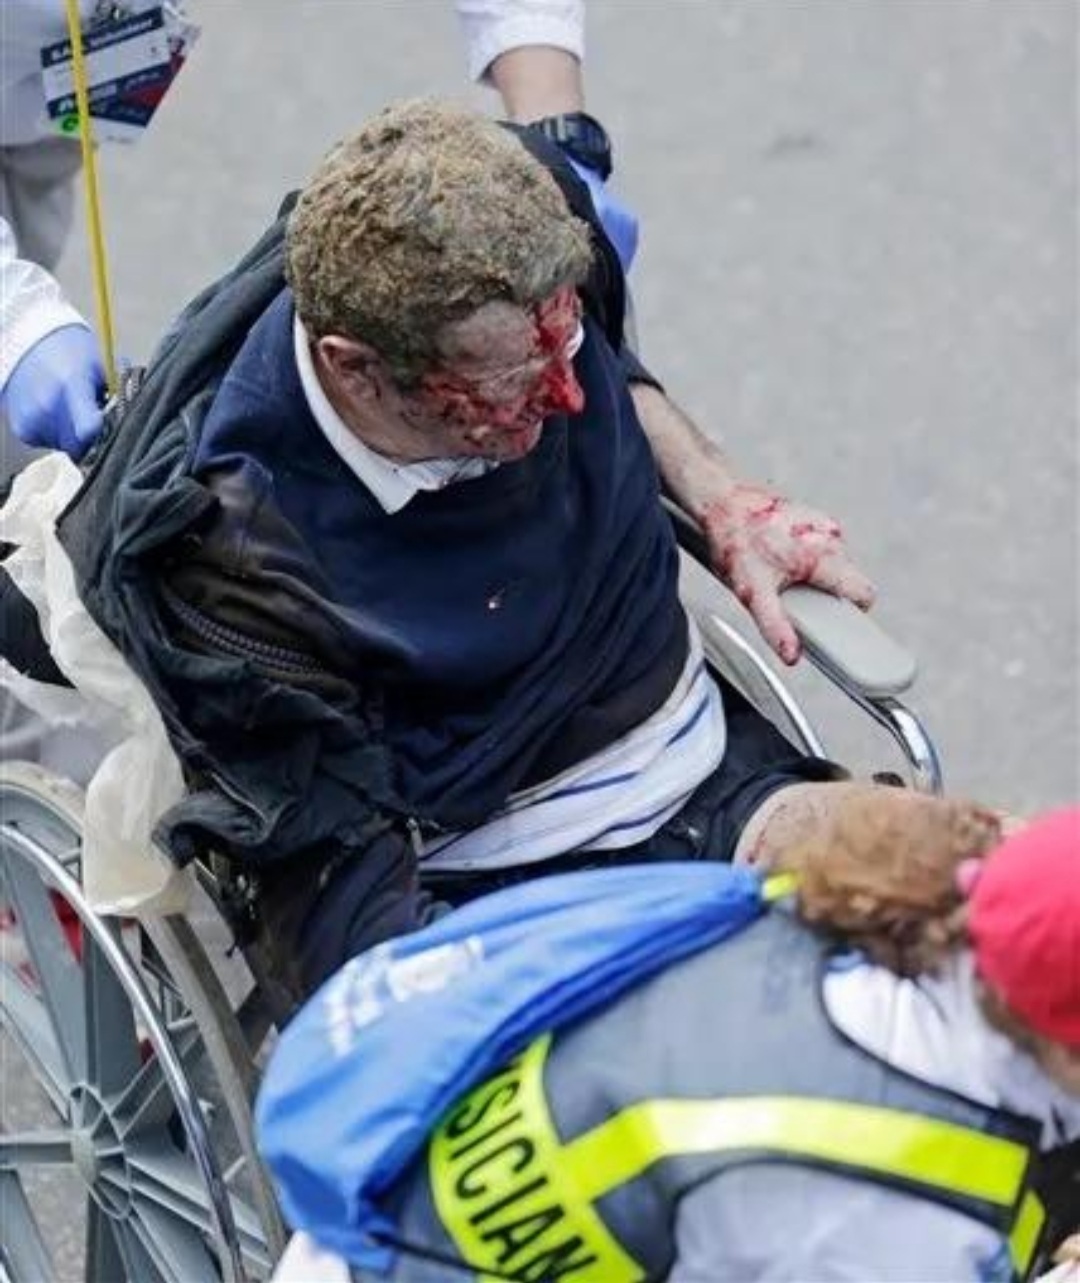 Boston Marathon bombing pic dump